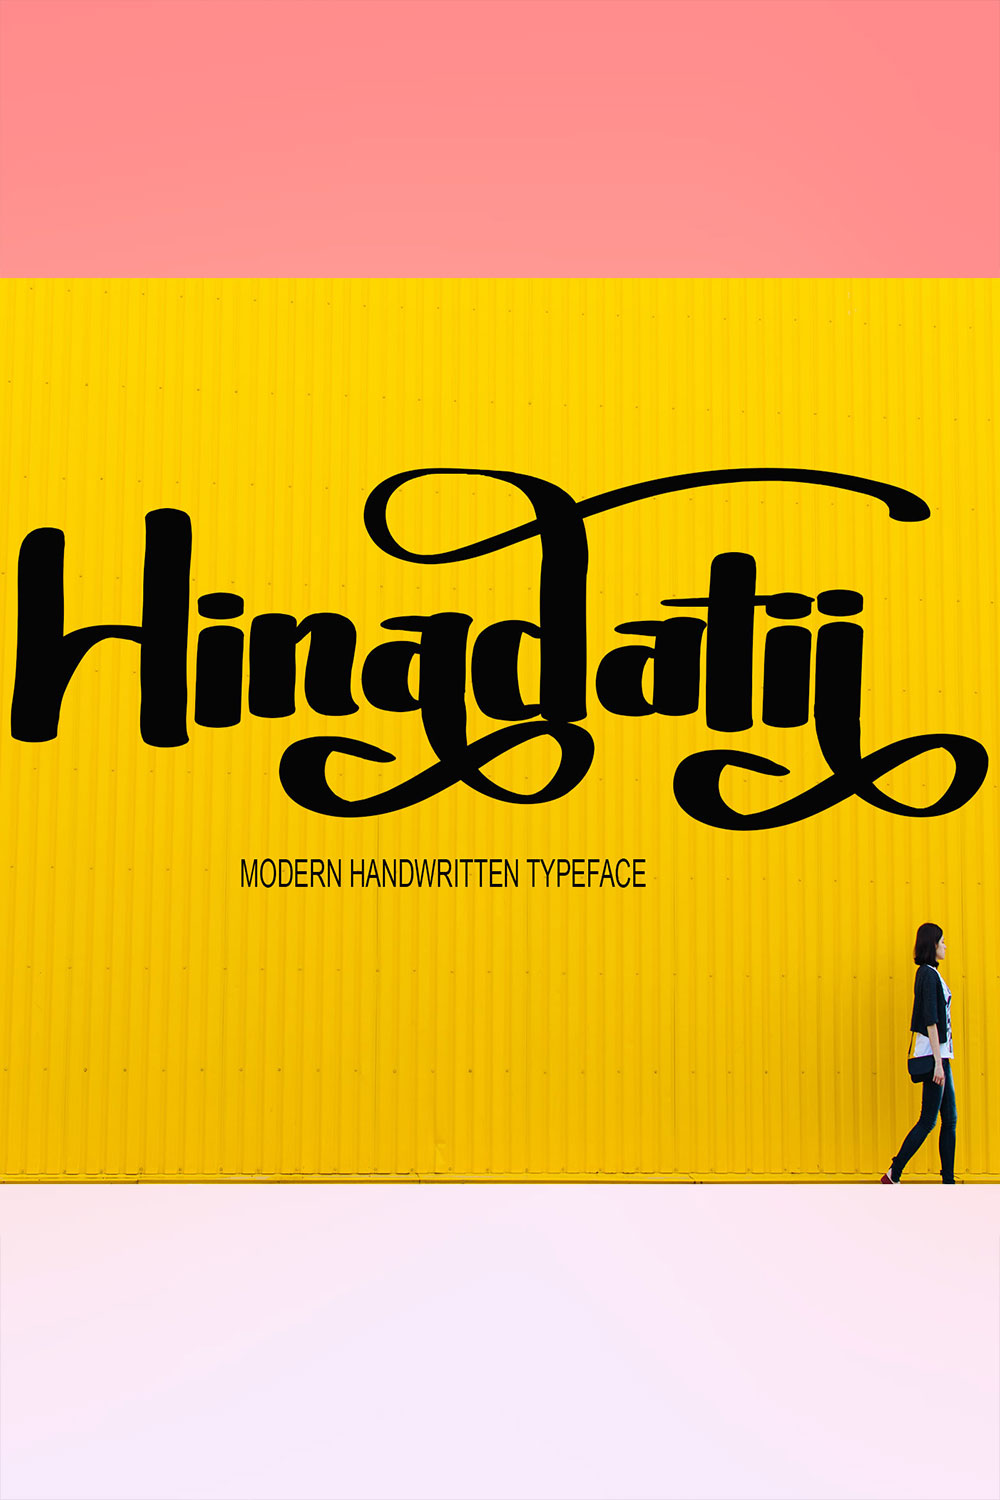 Hinadati Script Font Pinterest image.